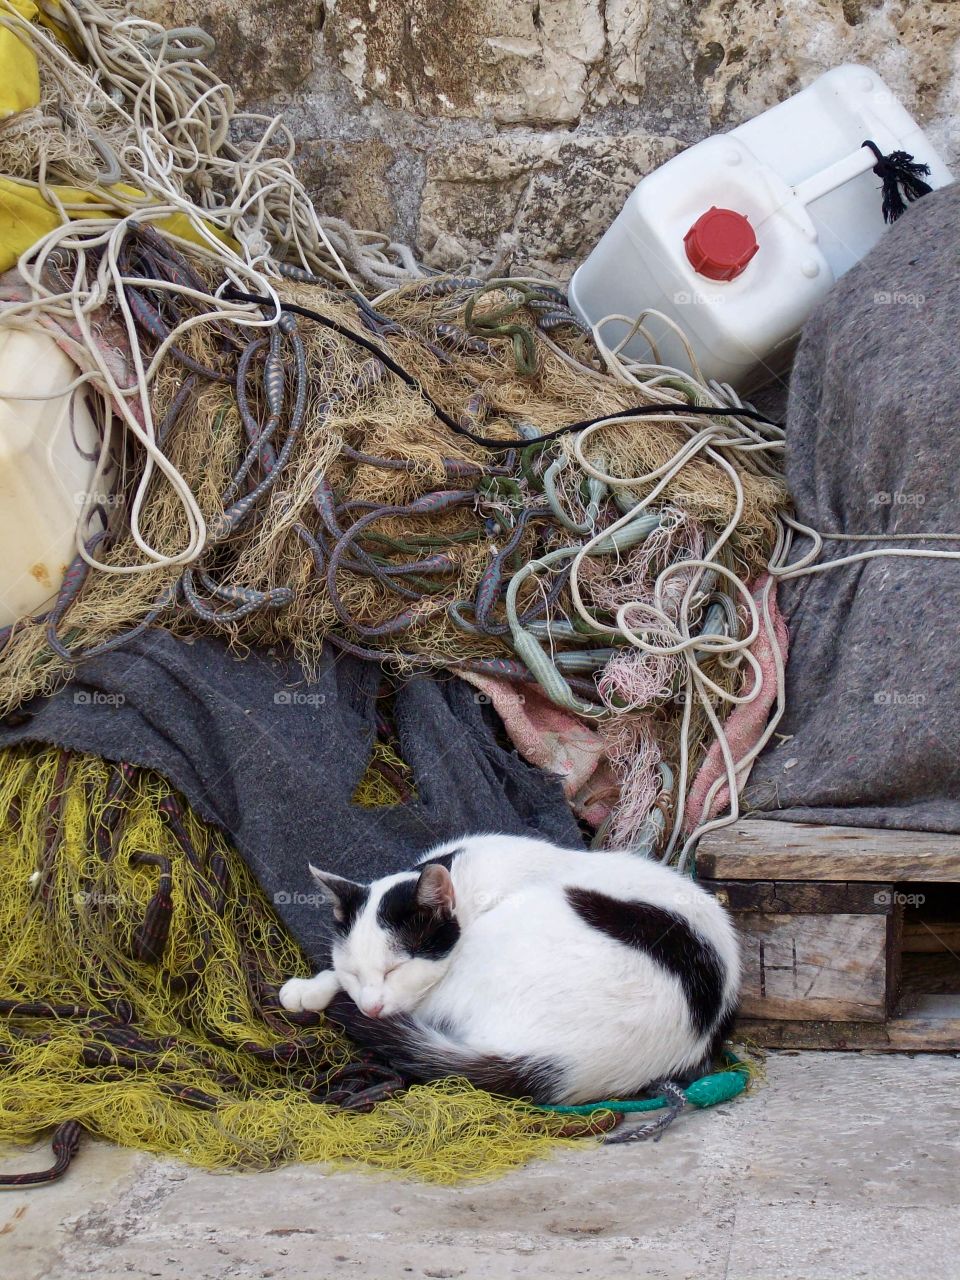 A Cat sleeping next to a fishing net pile